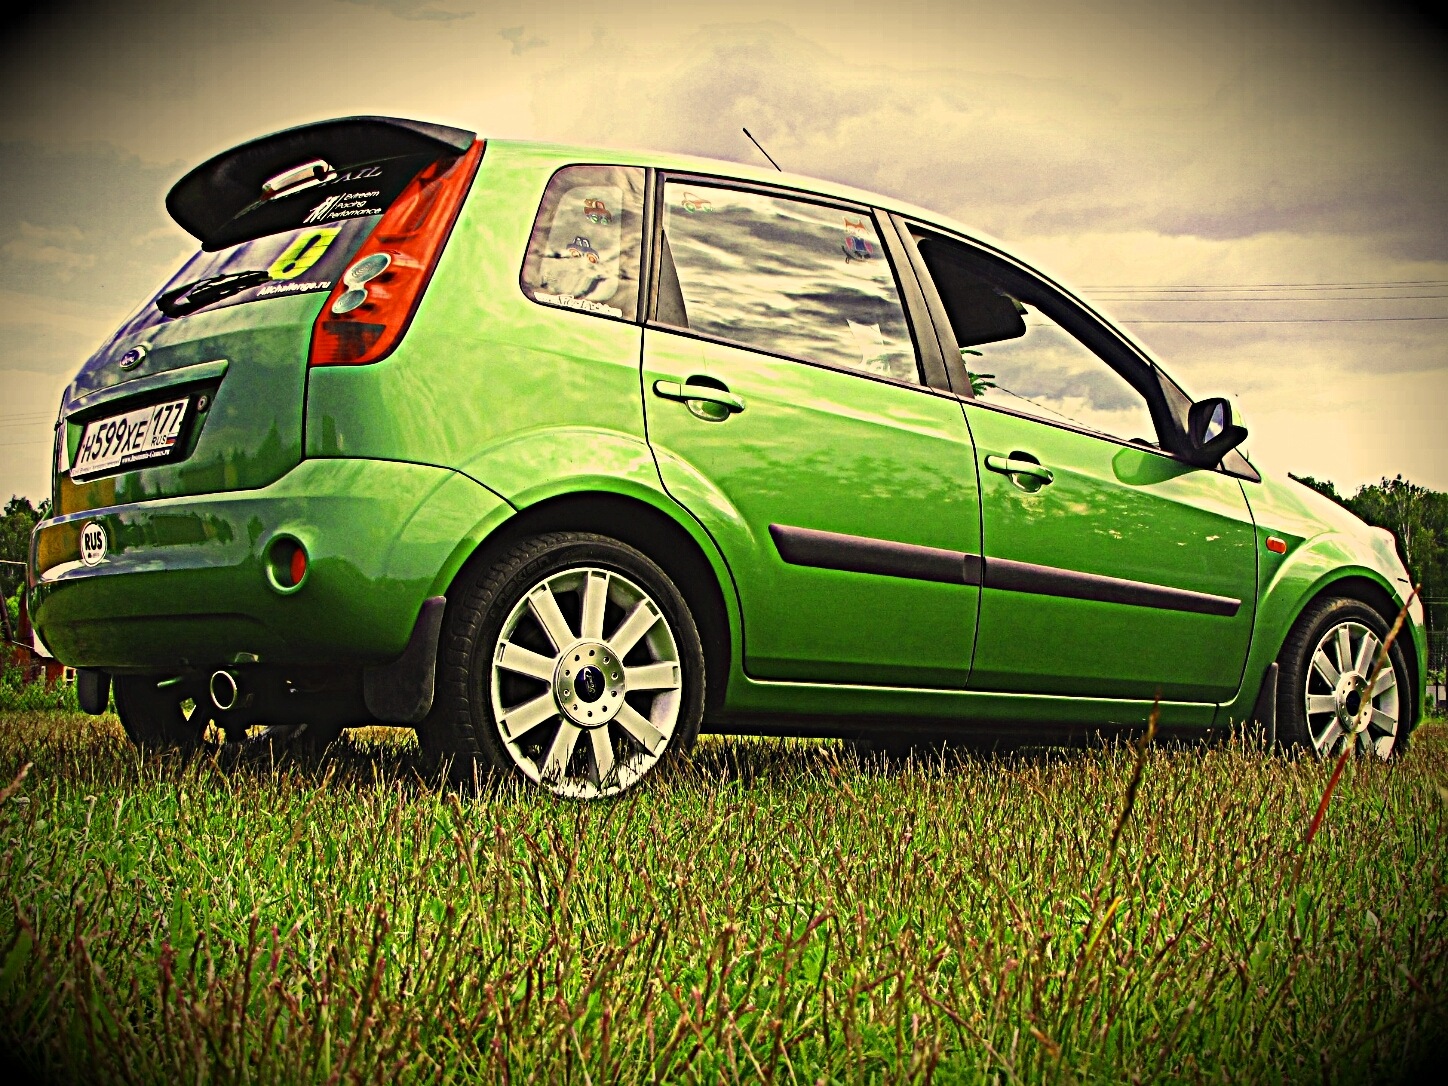 Ford Fiesta mk5. Ford Fiesta mk2 1.6. Green Hatchback Ford Fiesta mk5 1.4. Ford Fiesta mk5 спойлер. Масло форд фиеста мк5